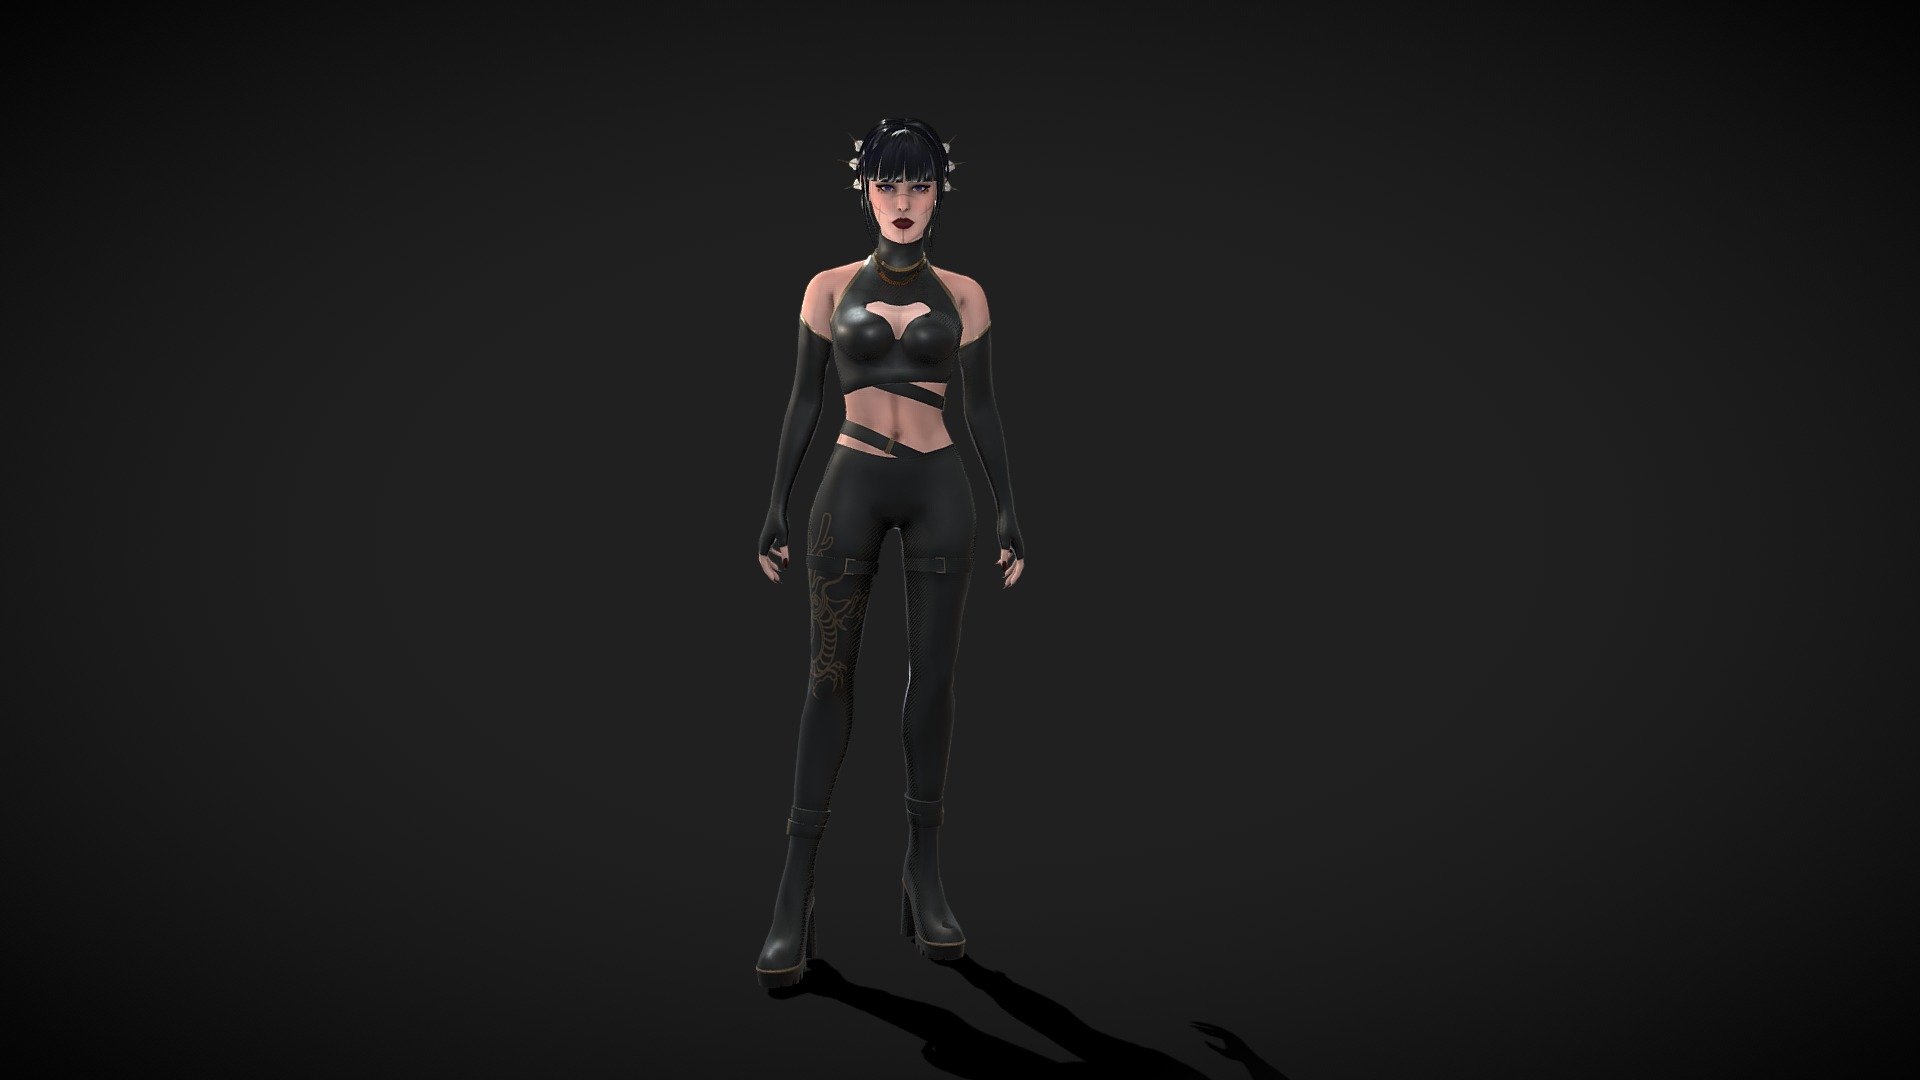 Concepts by Lee Kimsan https://www.artstation.com/artwork/r9nWV2 - The Black Dahlia - 3D model by wwwlas (@avlasova11) 3d model